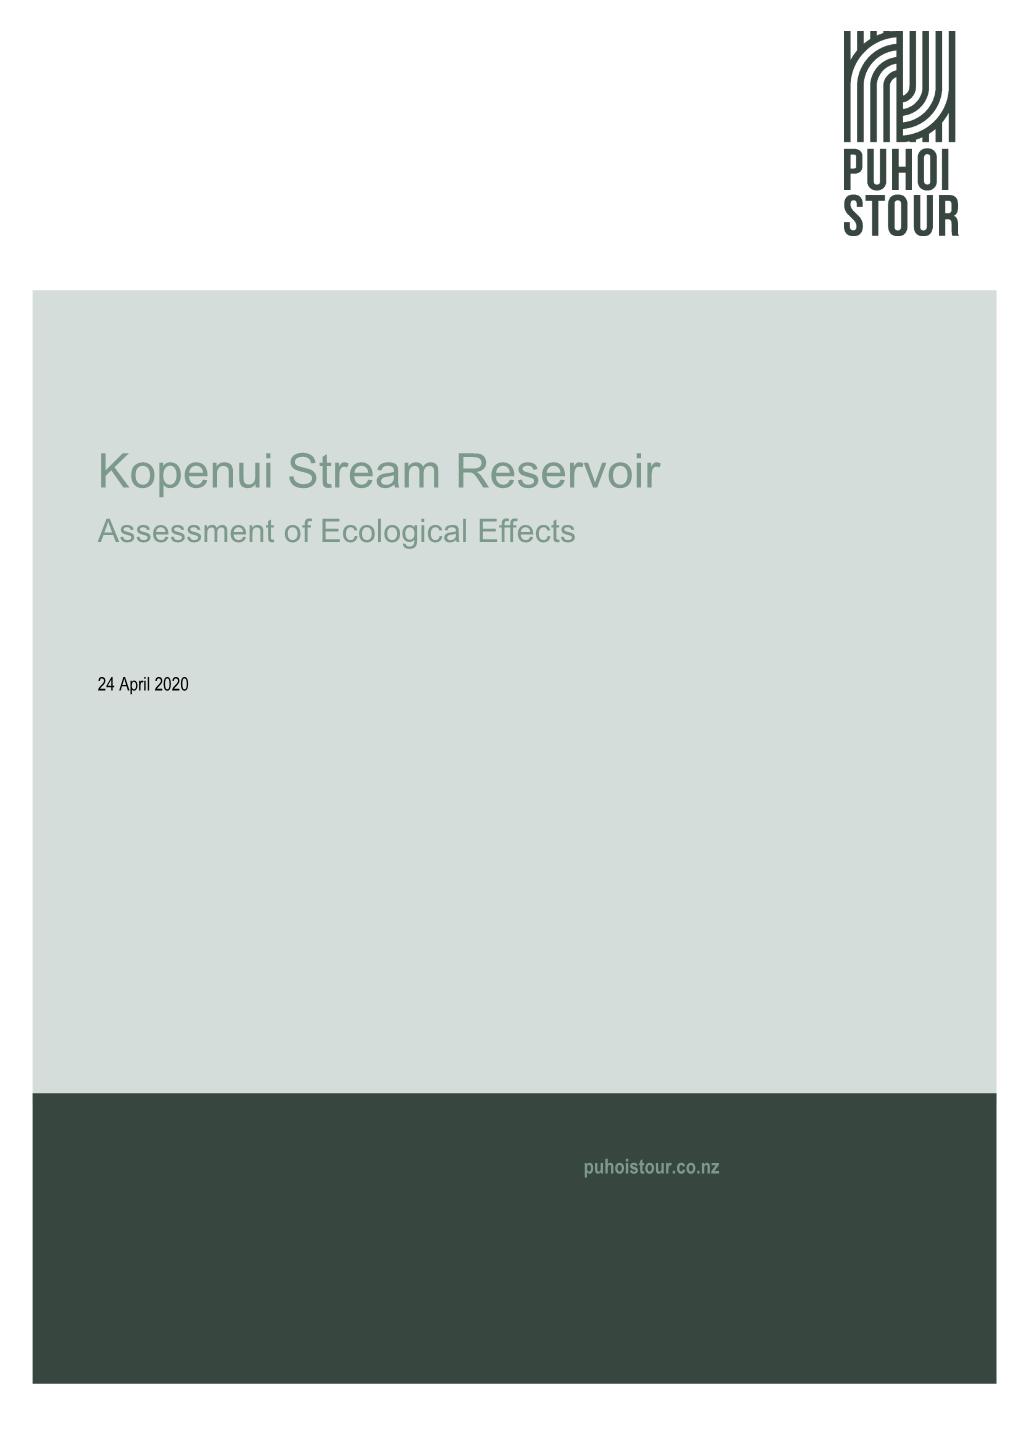 Kopenui Stream Reservoir Assessment of Ecological Effects